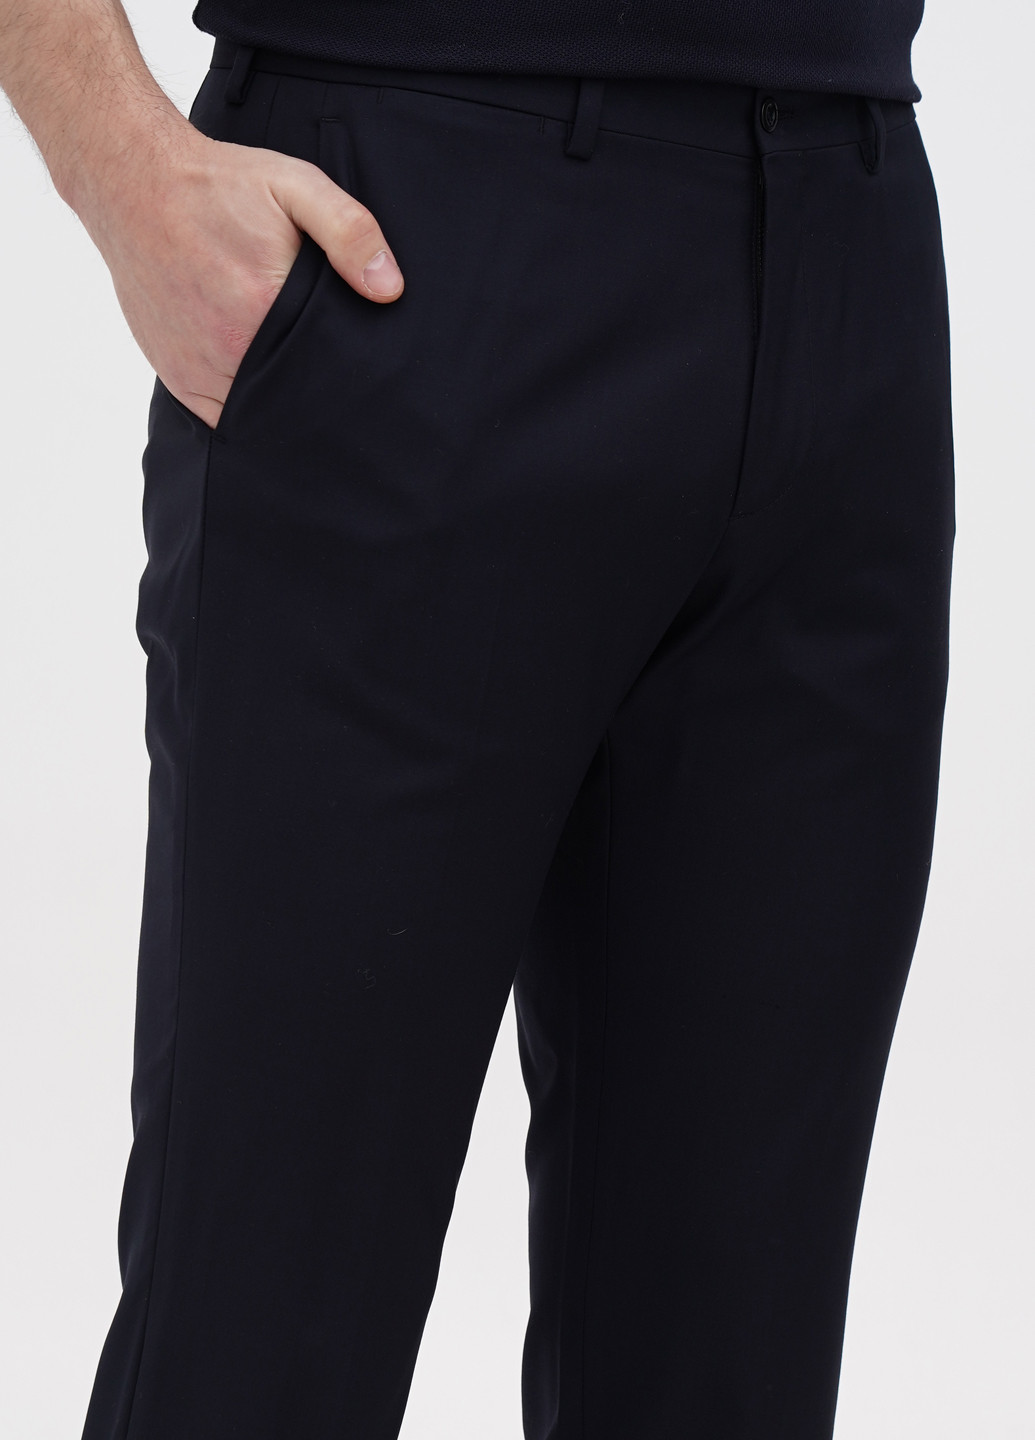 Темно-синие классические демисезонные классические брюки Ralph Lauren